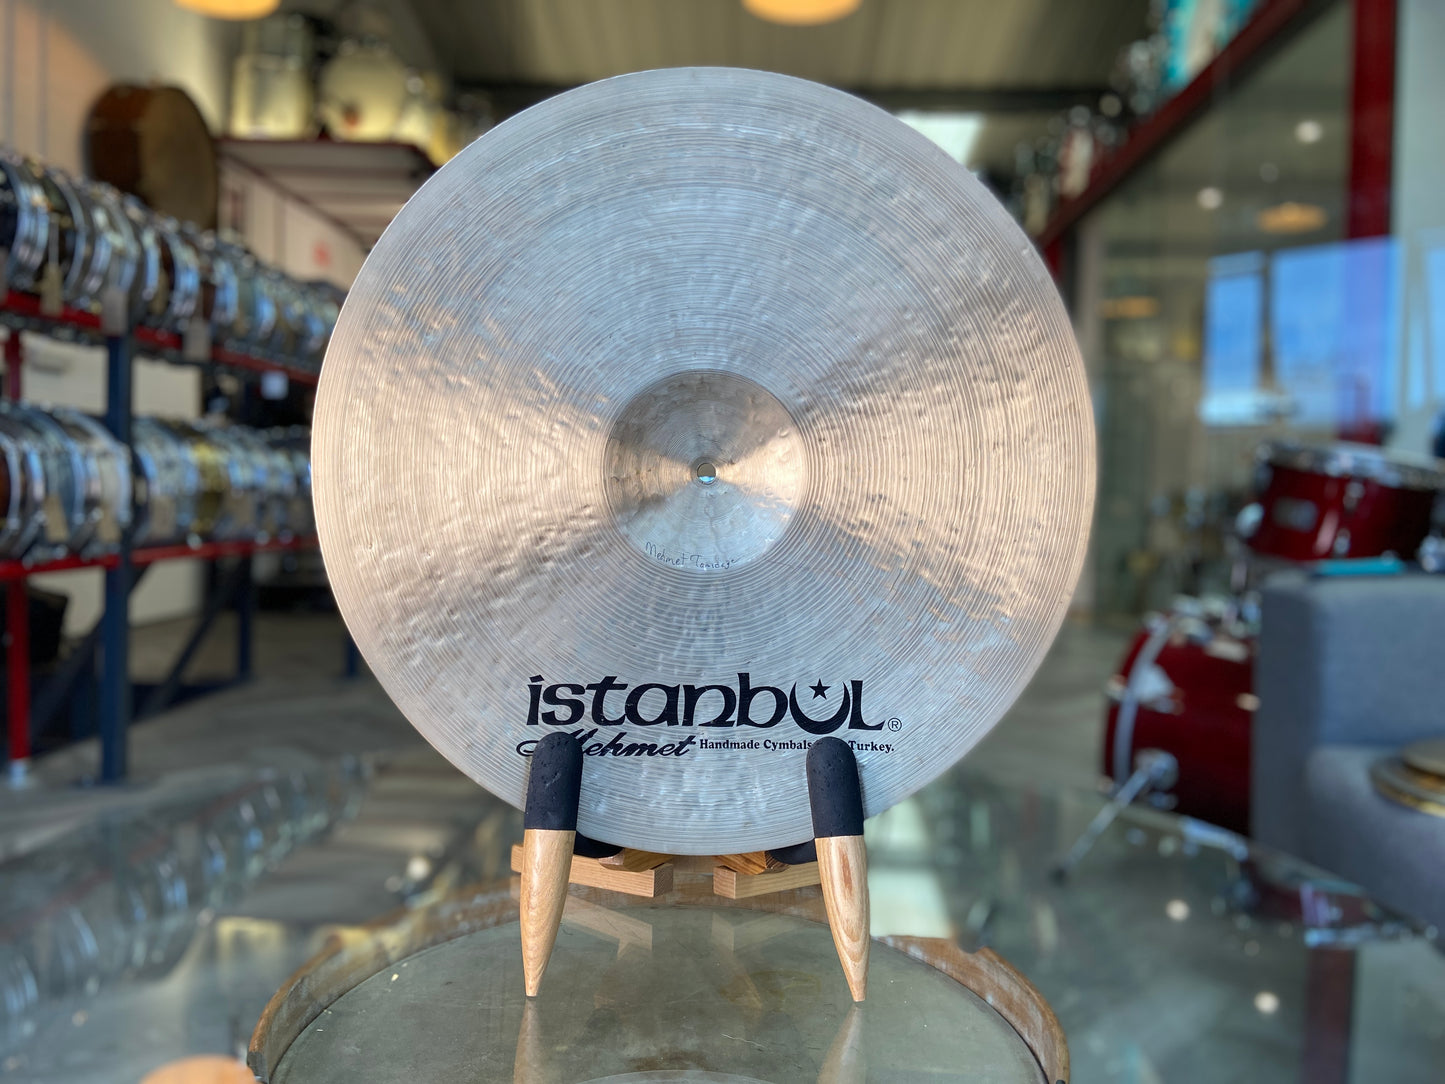 Istanbul Mehmet Traditional 20" Original Ride Cymbal